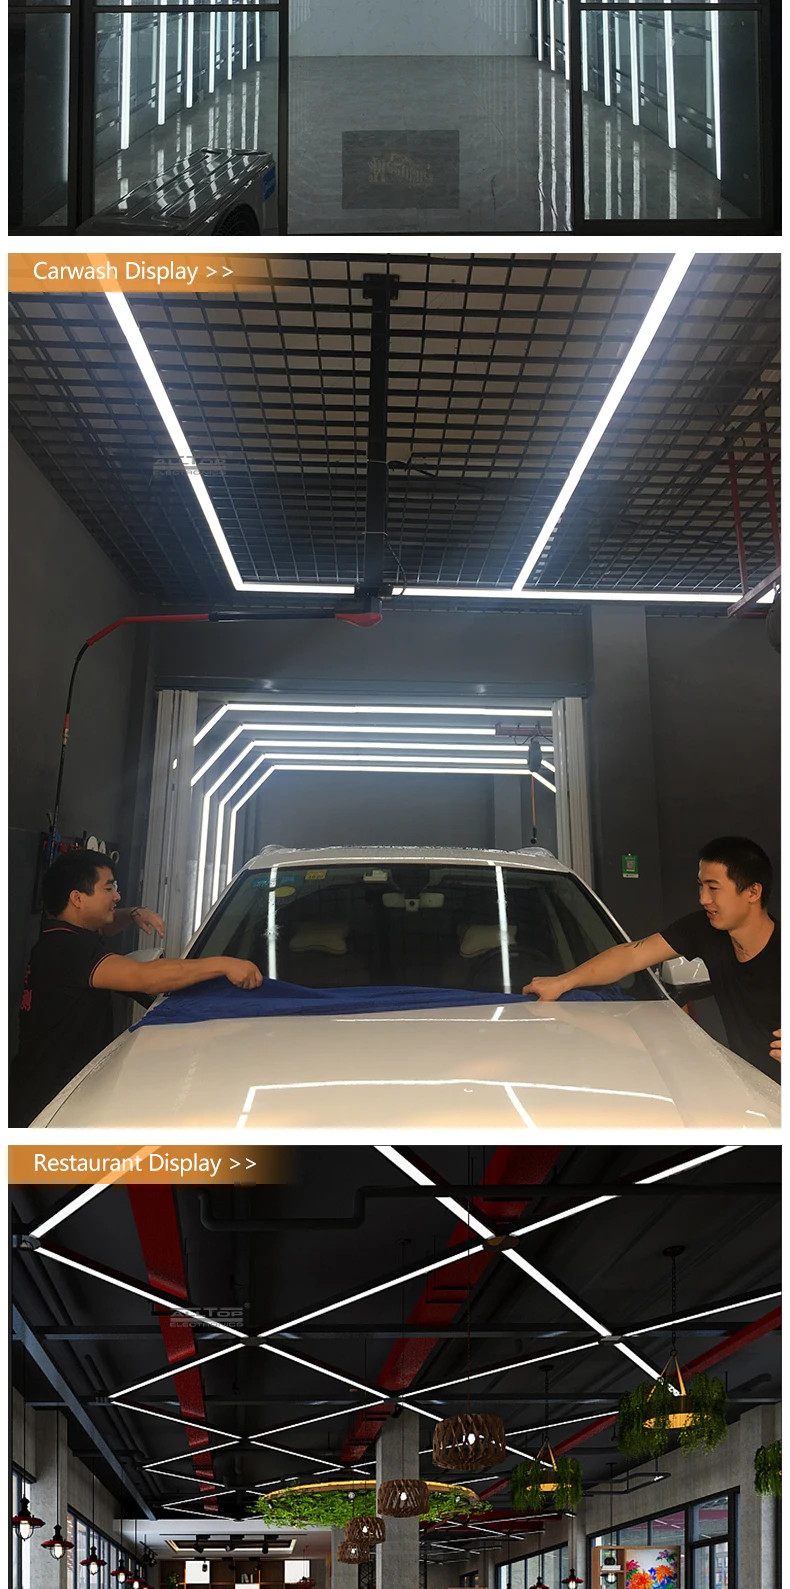 ALLTOP High brightness CE RoHs certification indoor lighting 48watt led pendant light